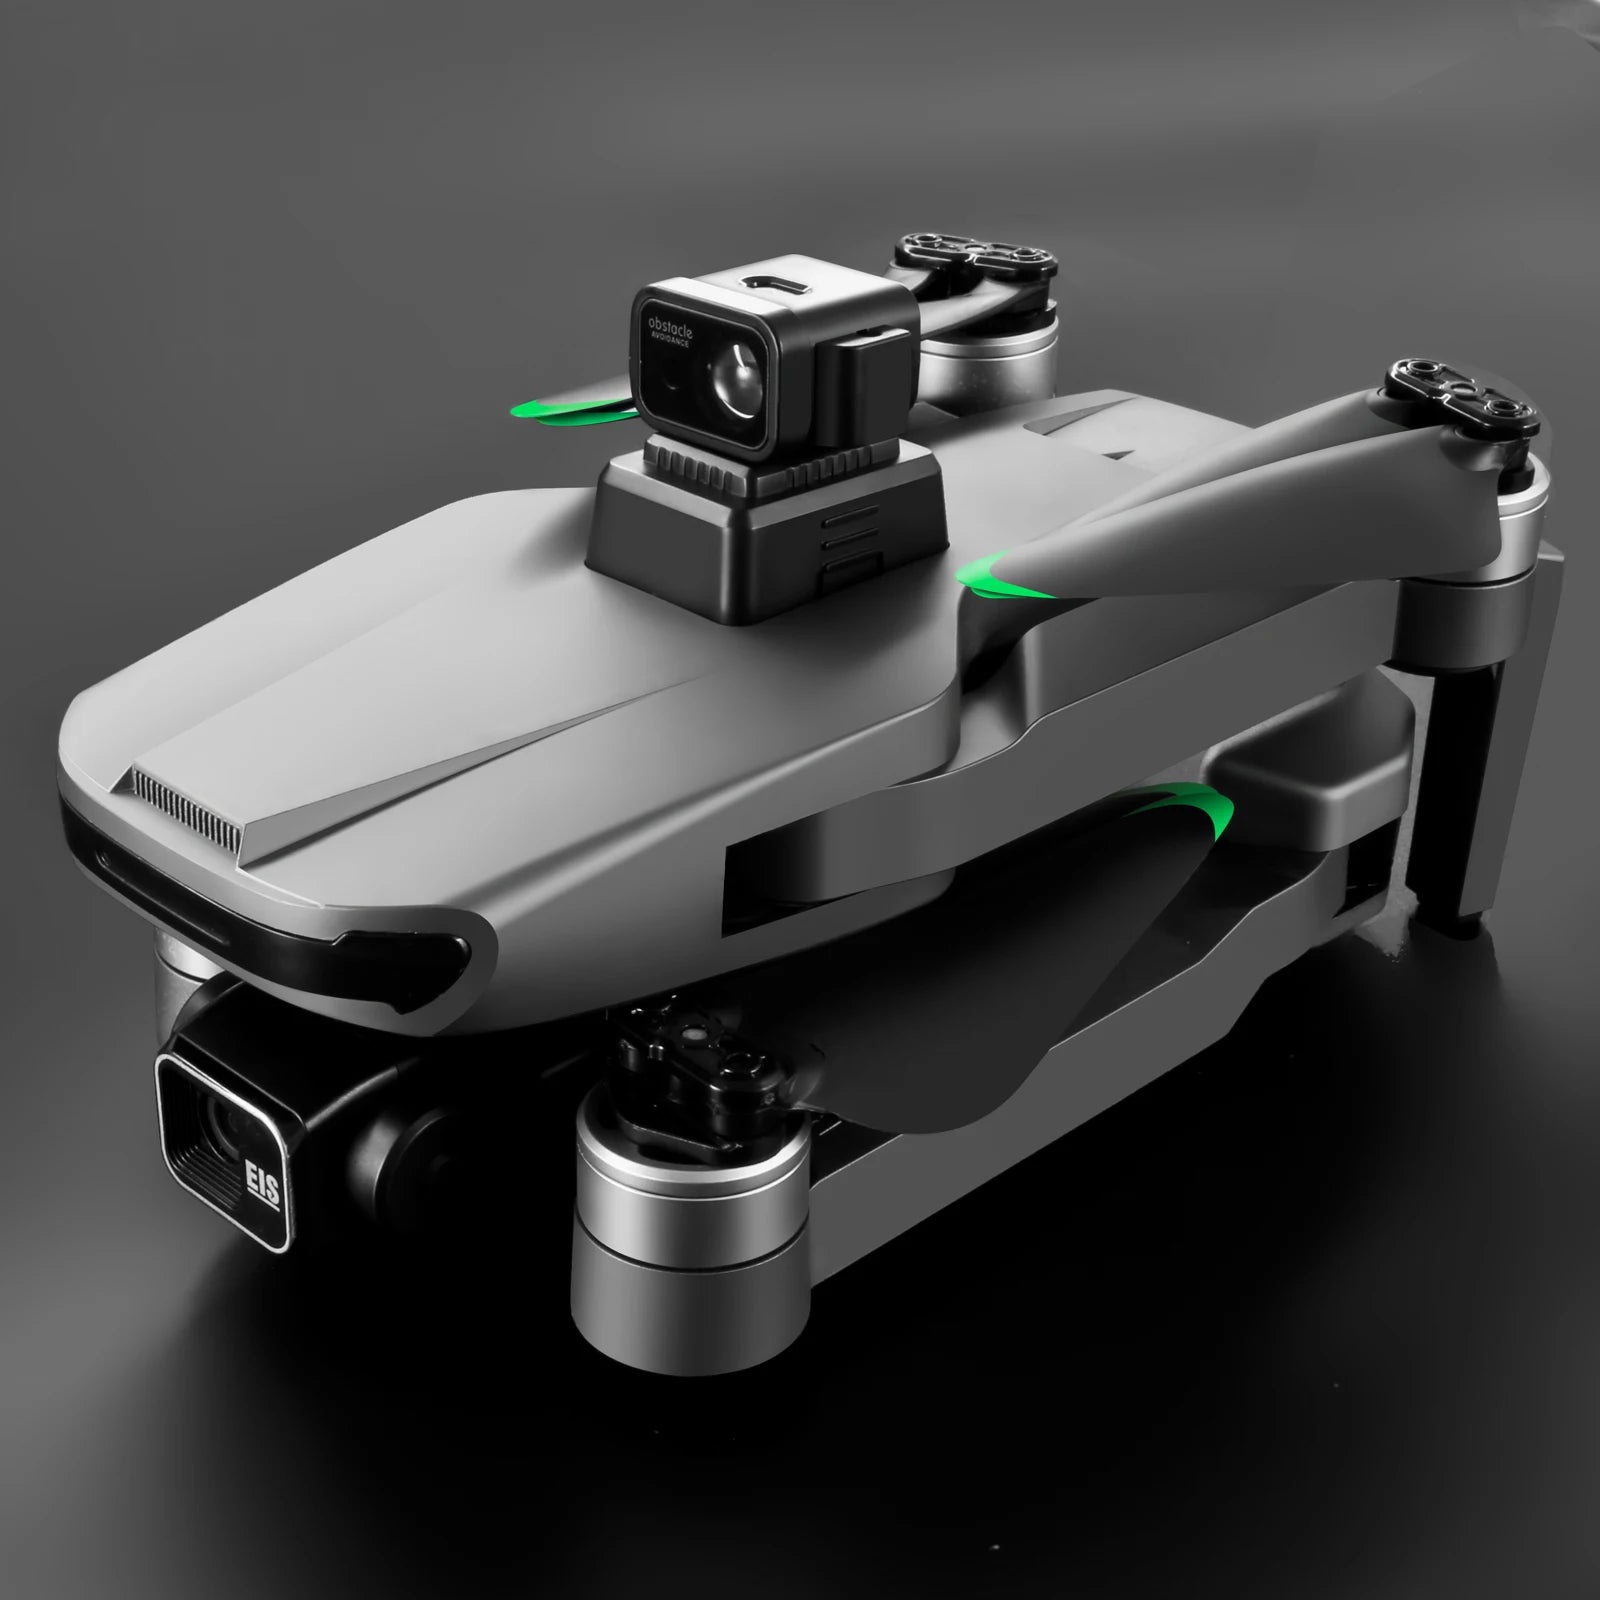 S155 Drone, GPS relay brushless UAV, payload 500g, anti-shake gimbal